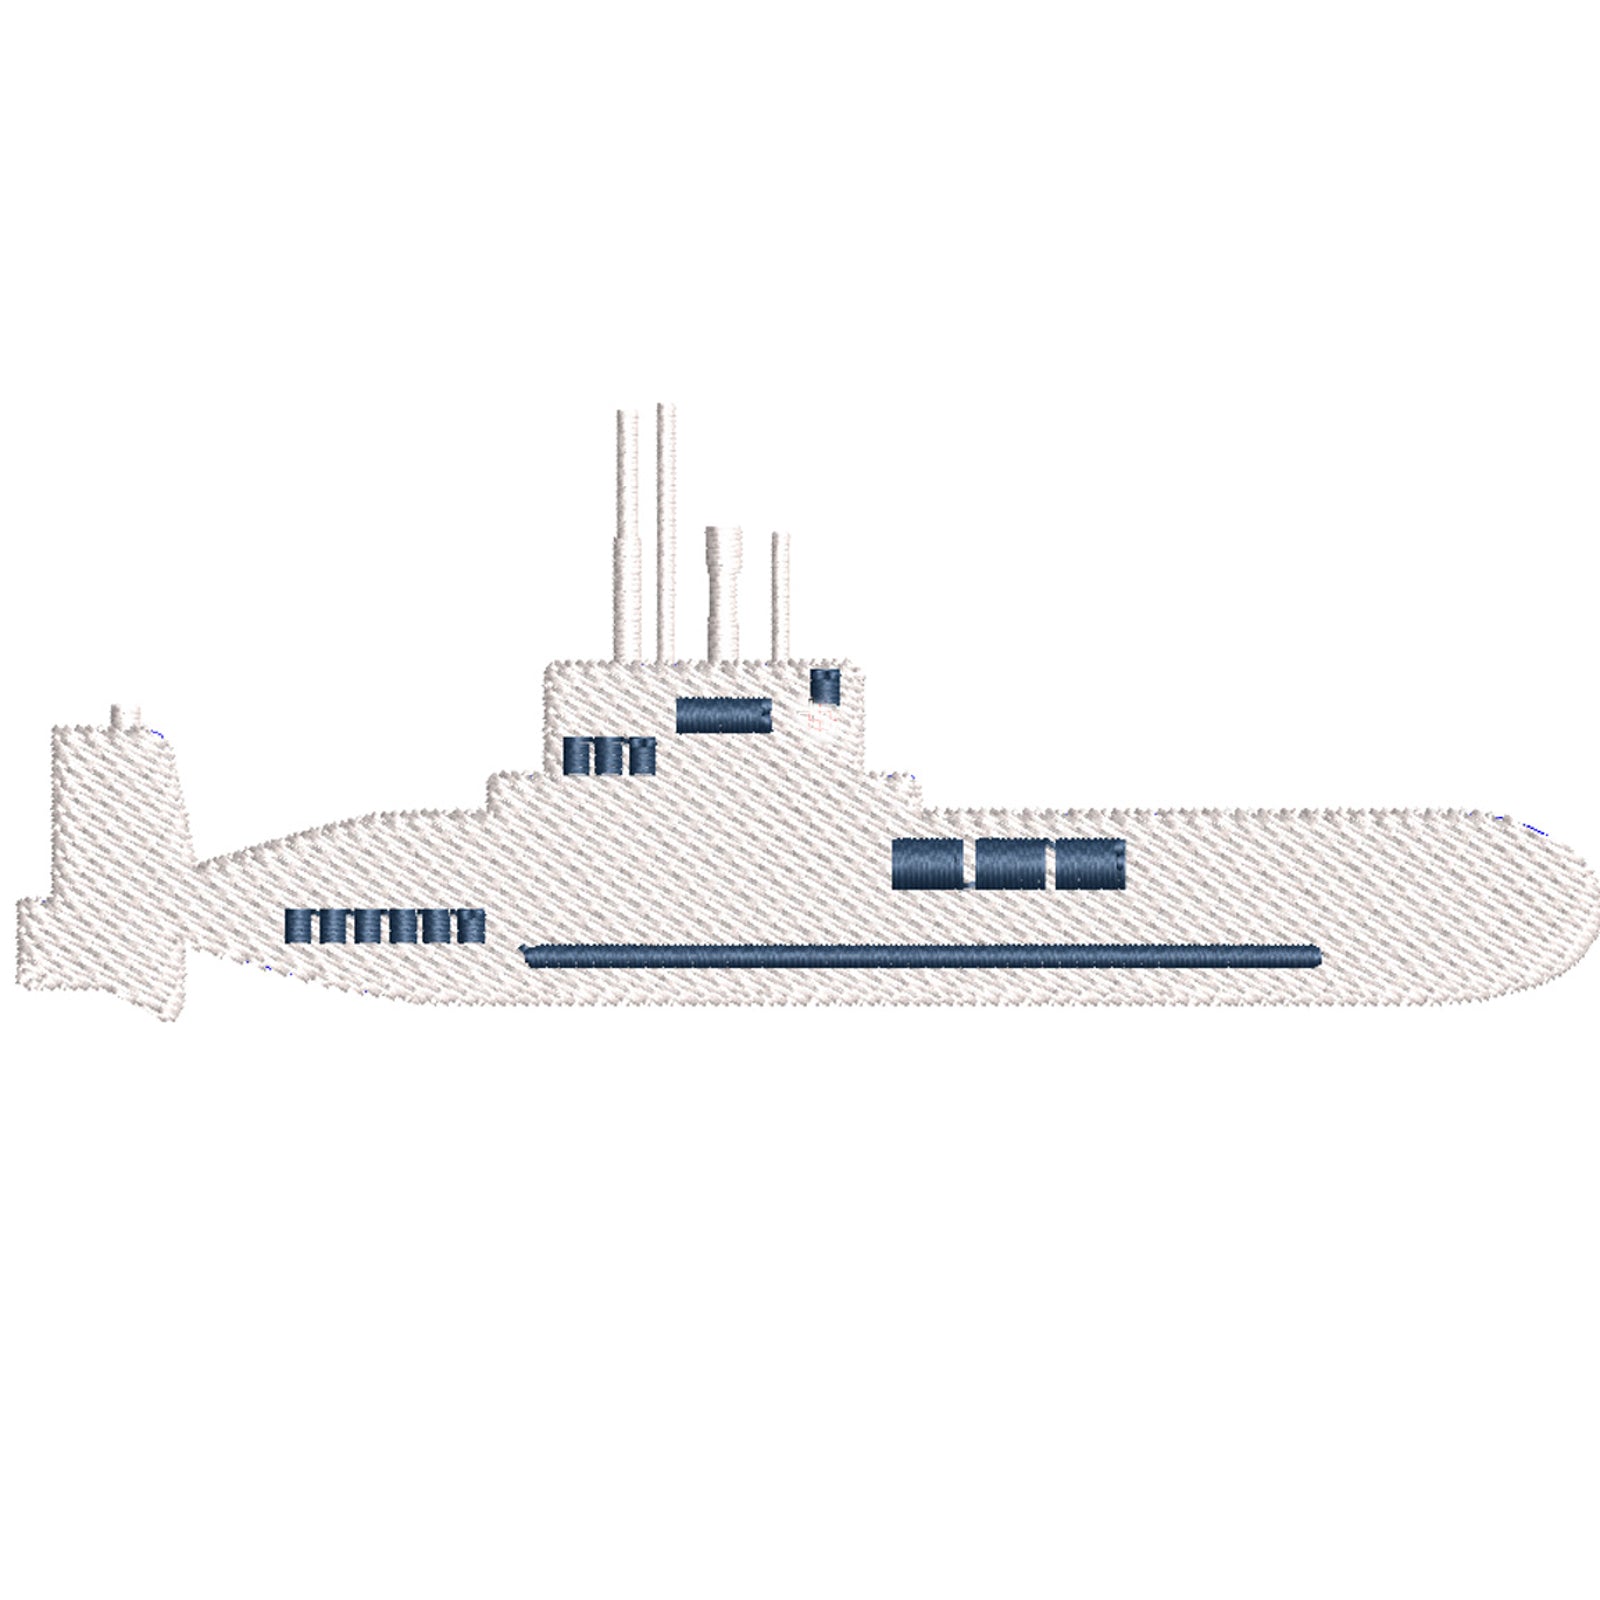 US Navy Submarines | Navy Digitized Embroidery Design | e4Hats – e4Hats.com